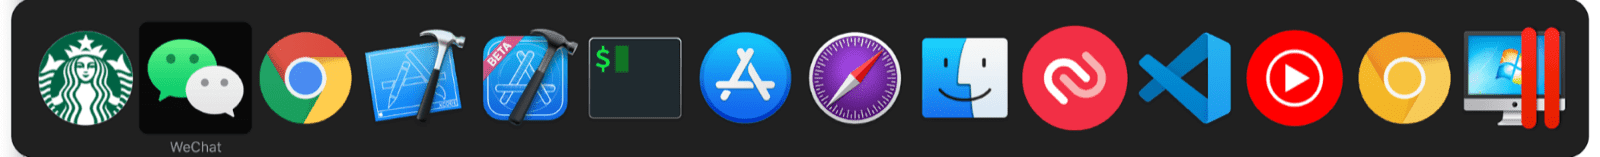 macOS 多任务切换器包含迷你应用和常规 macOS 应用。